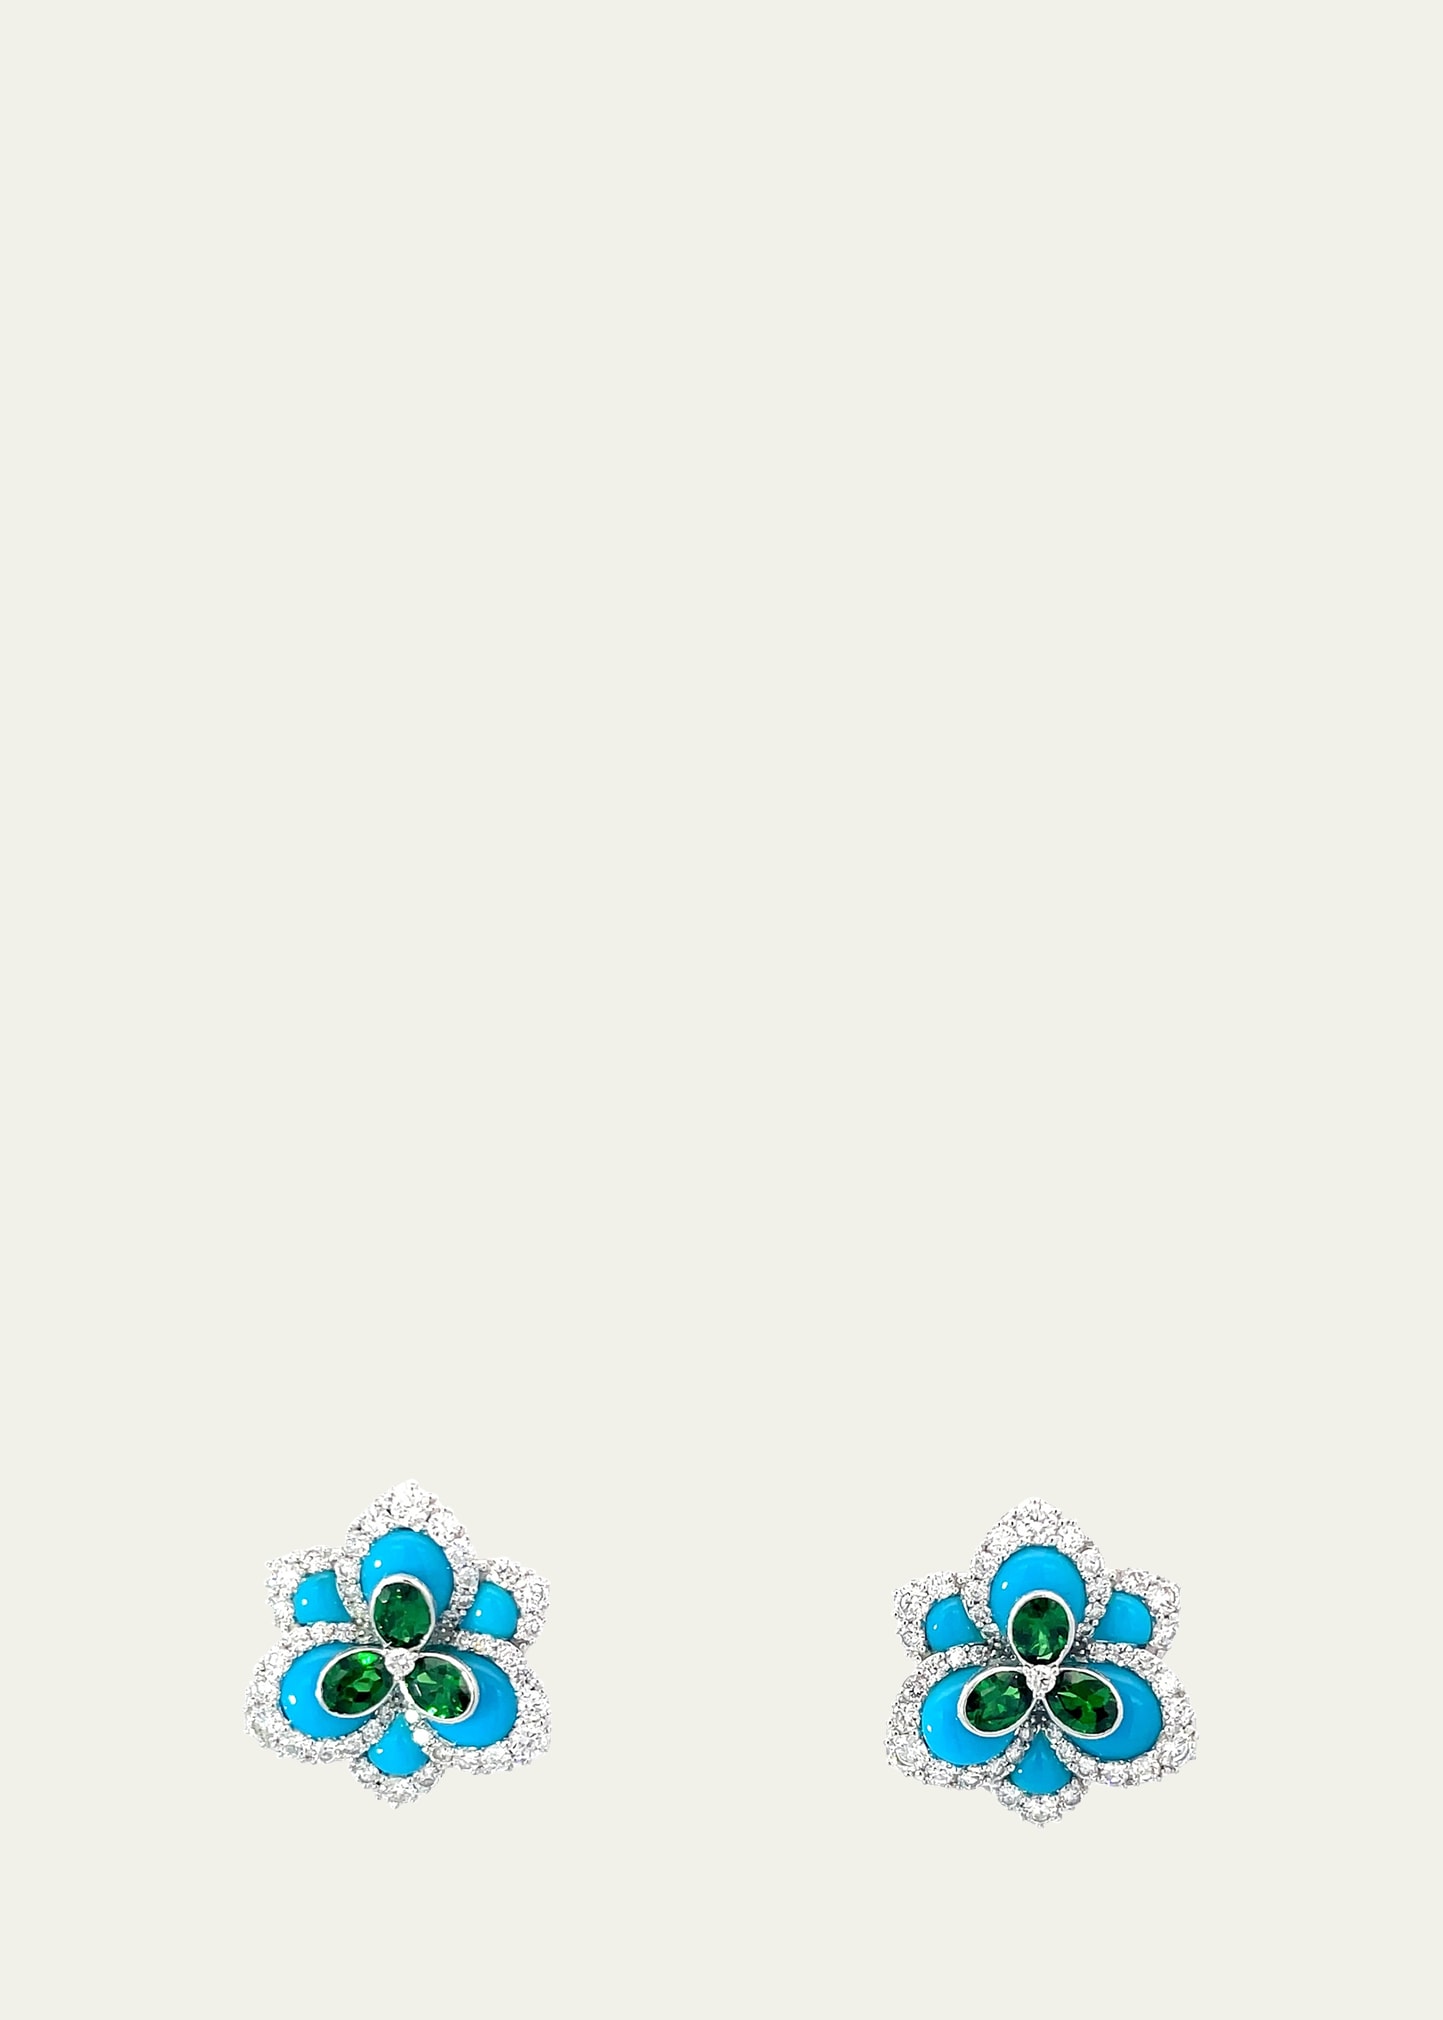 18k White Gold Diamond, Tsavorite, and Turquoise Flower Statement Ring